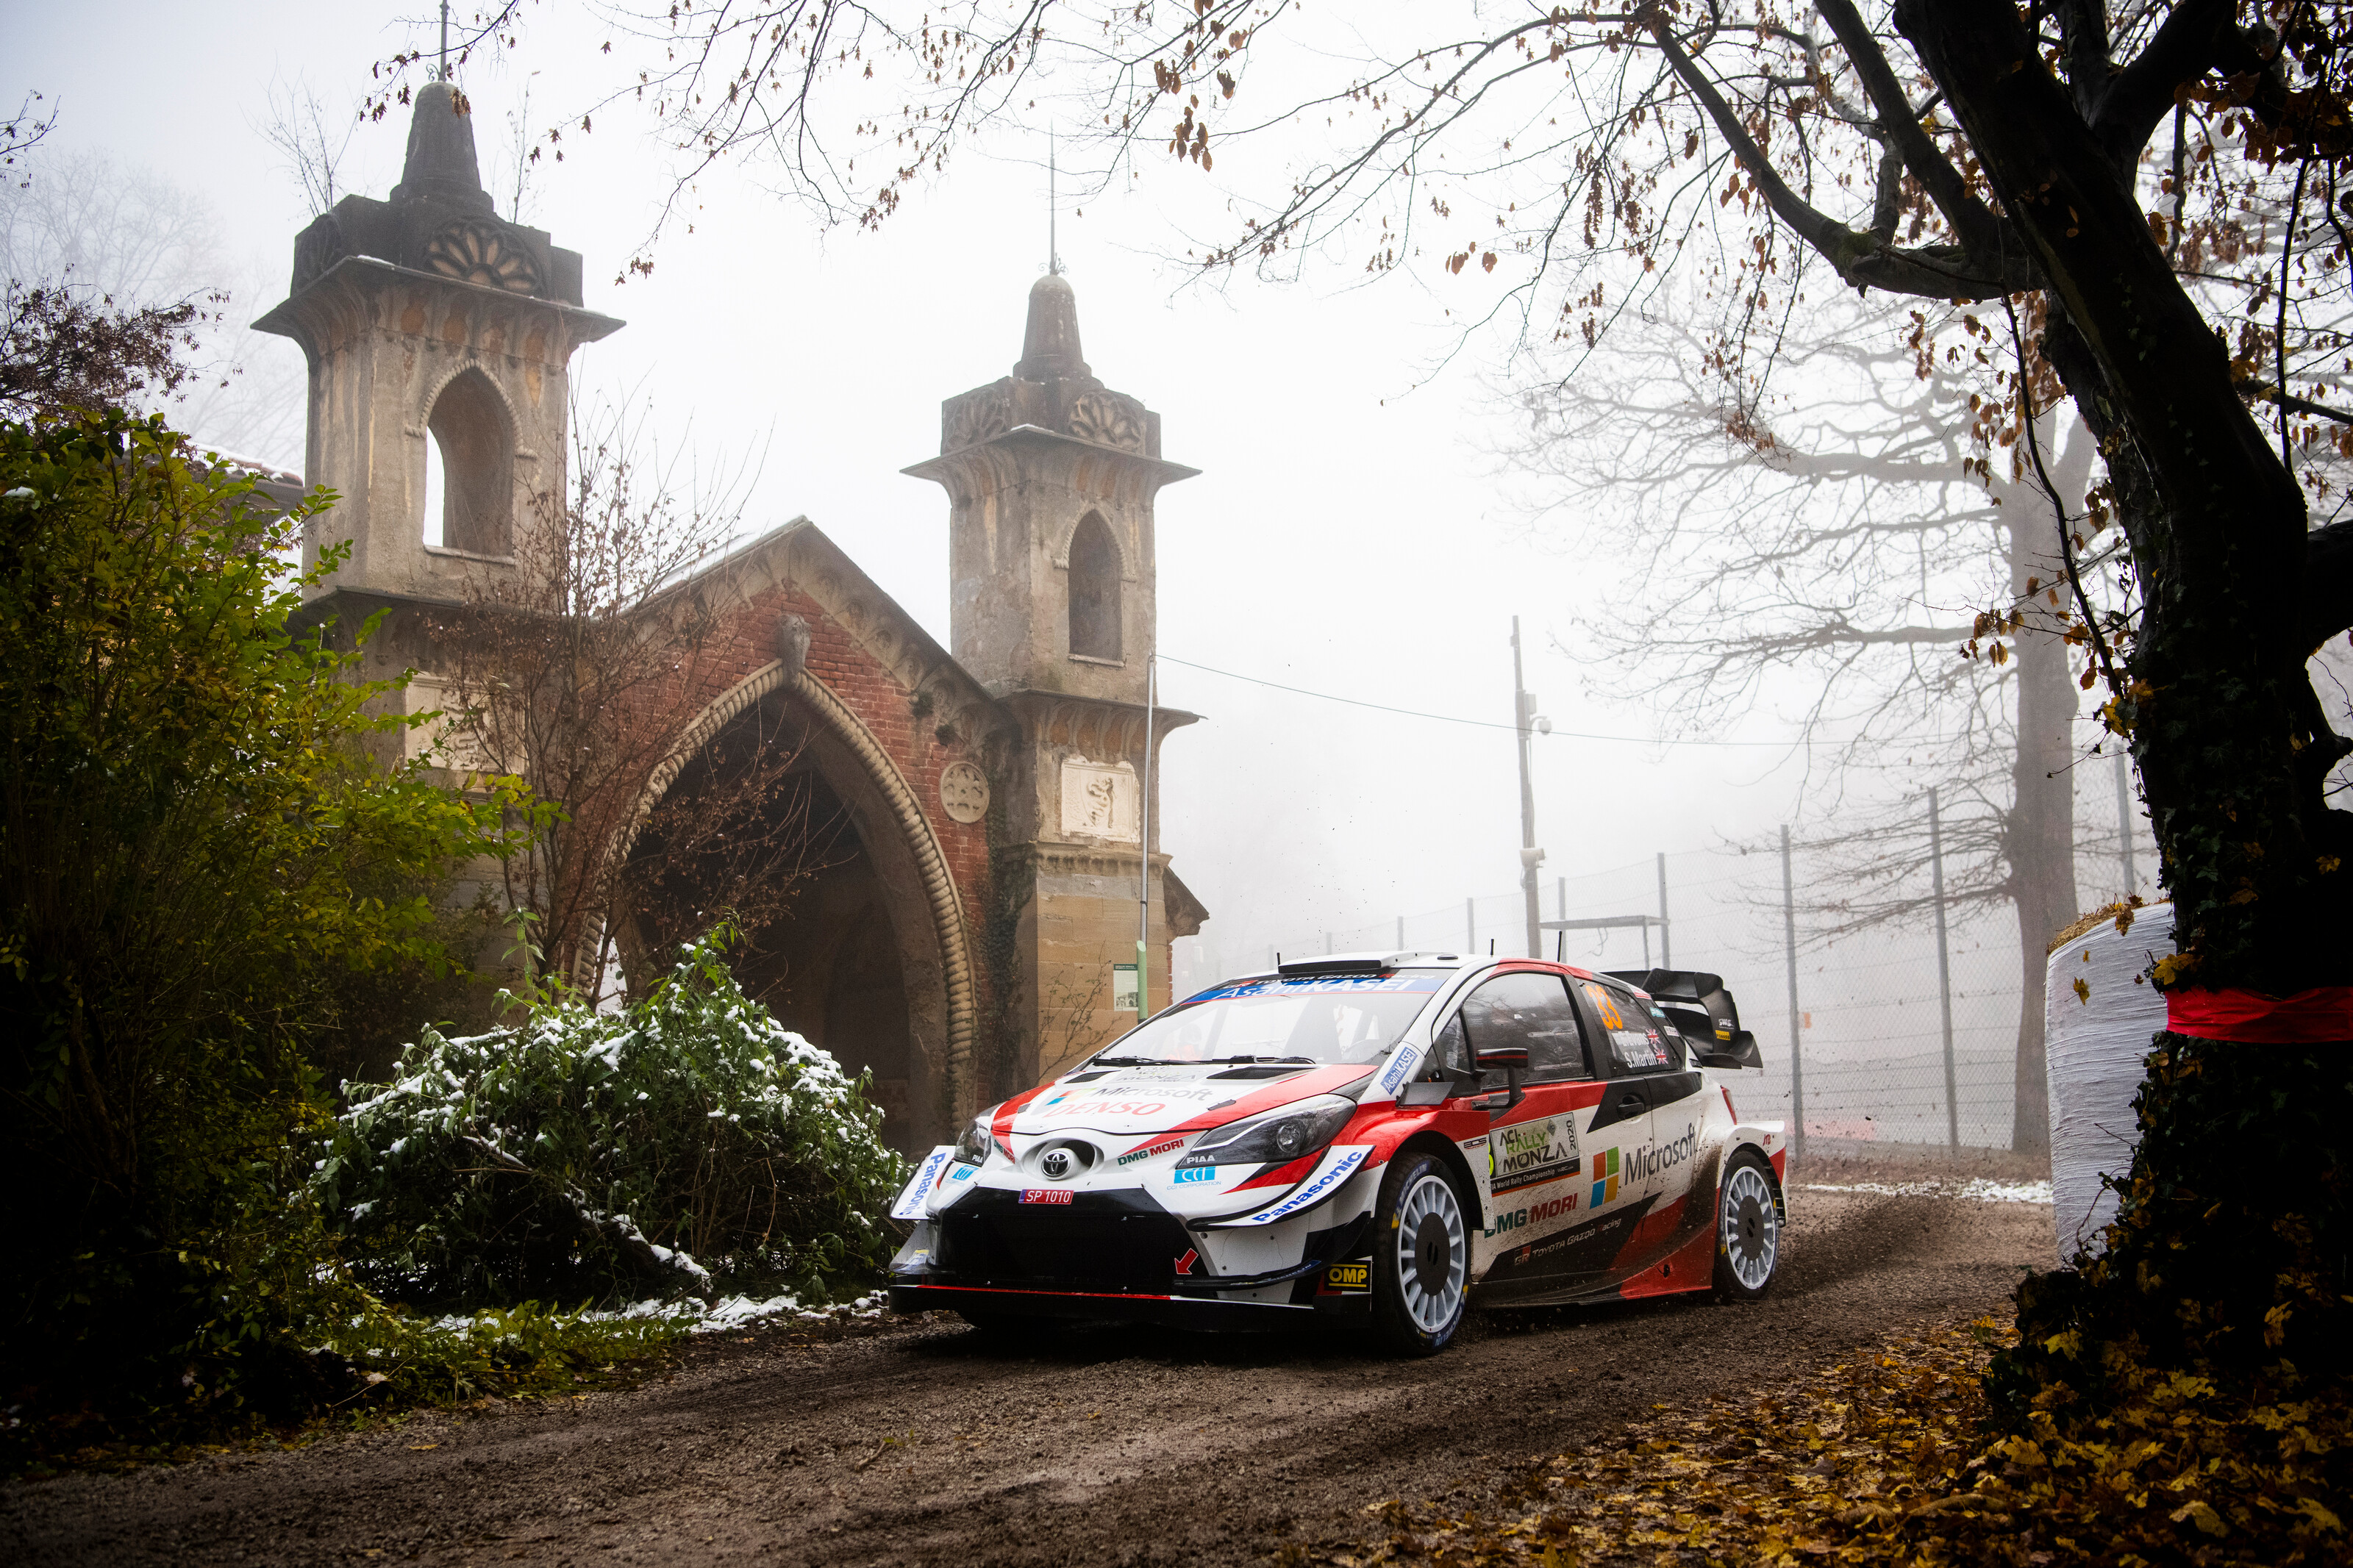 FordPerformance - WRC: ACI Rally Monza [3-6 Diciembre] - Página 5 EoZLfipWMAUttwW?format=jpg&name=4096x4096